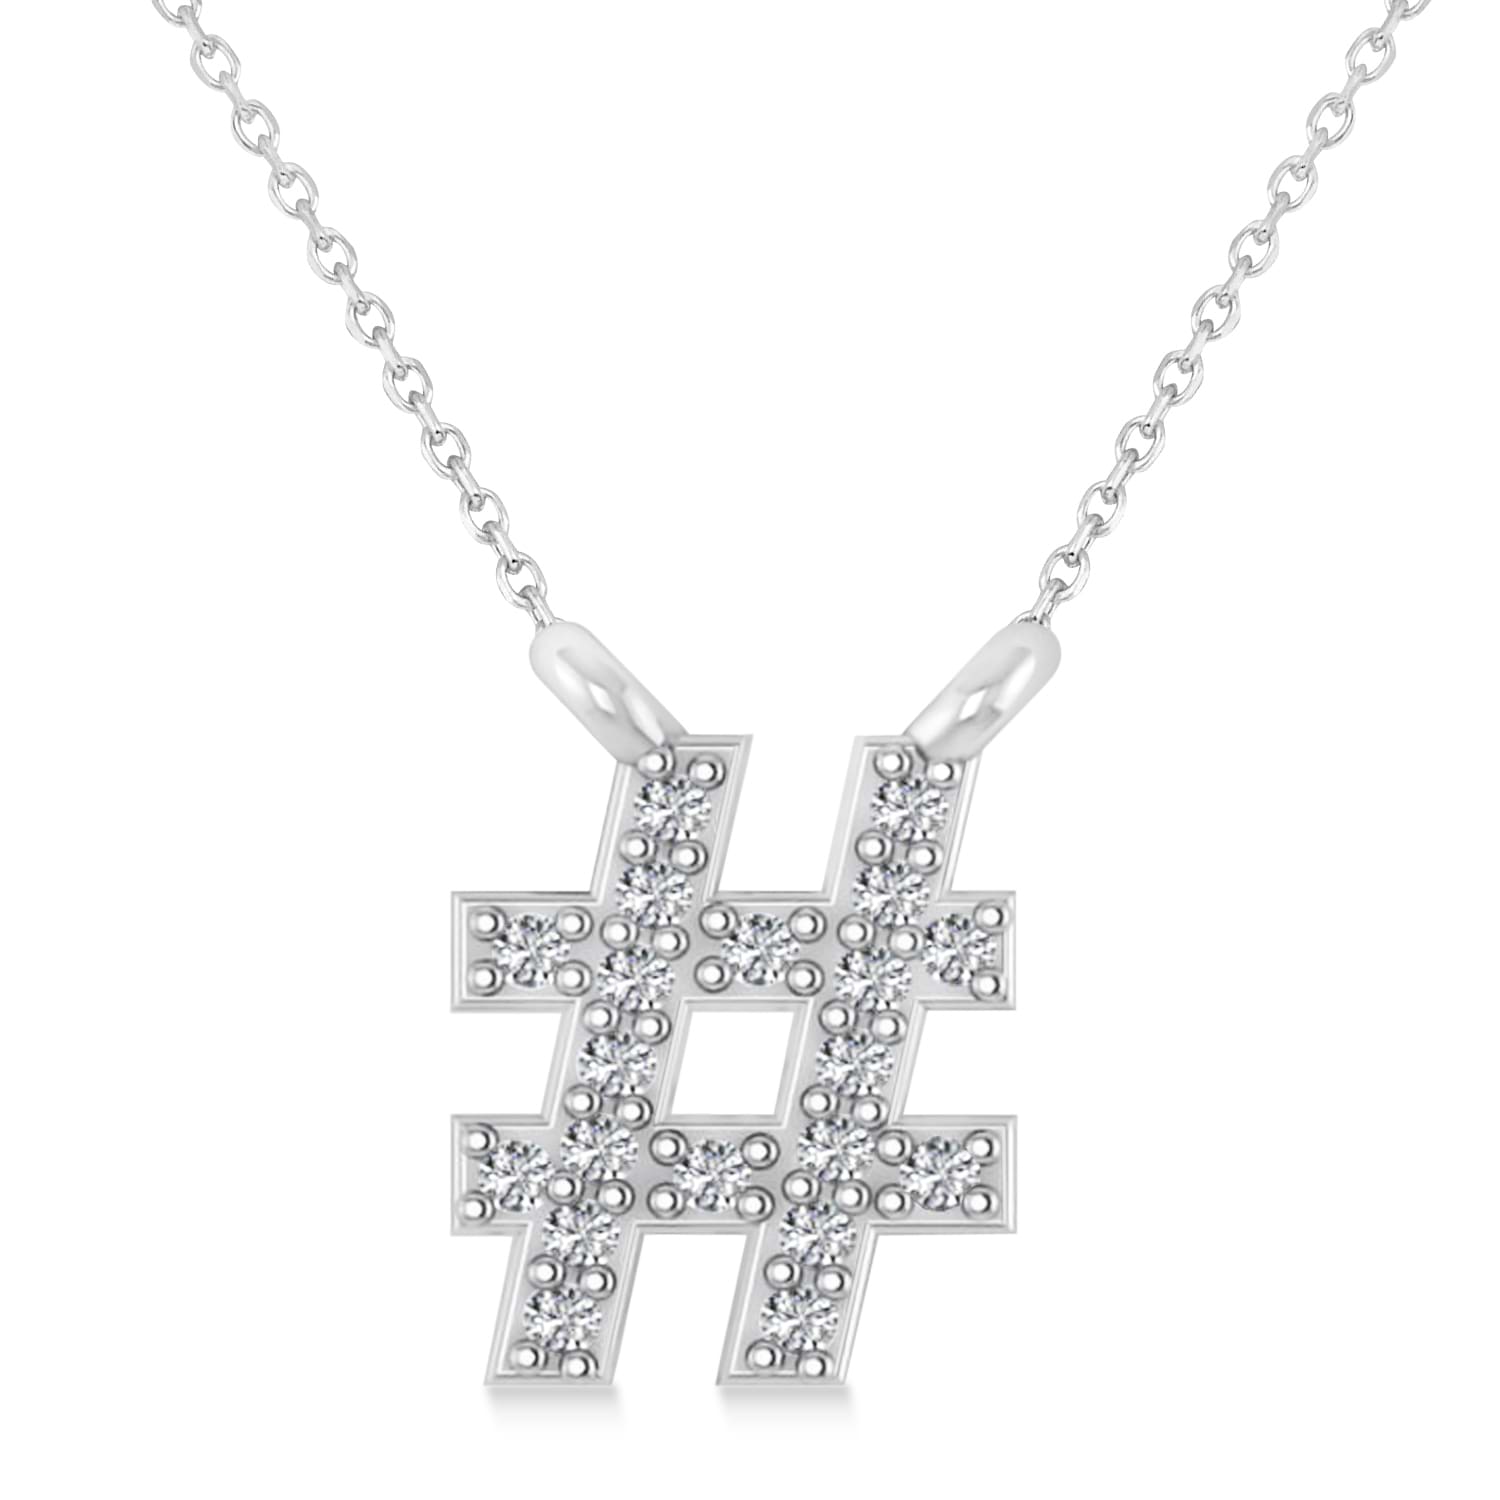 Diamond Hashtag Fashion Pendant Necklace 14K White Gold (0.10ct)